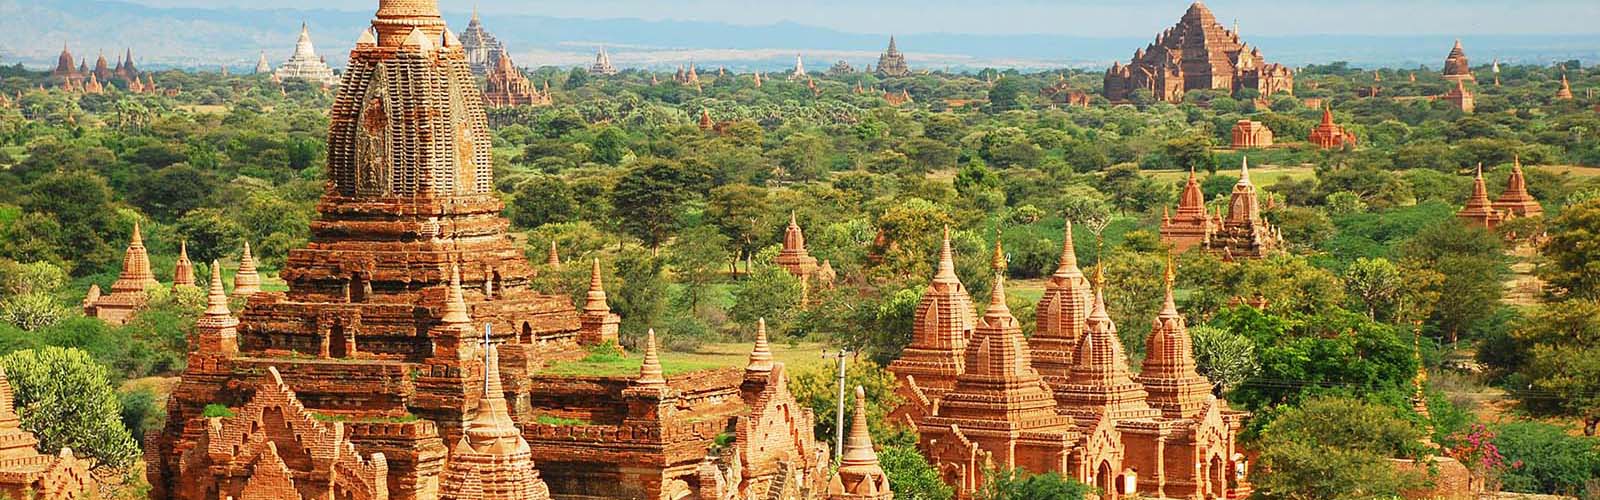 viaggi in birmania, birmania viaggi, tour birmania, Viaggi e Tour birmania,  Vacanze e Tour birmania